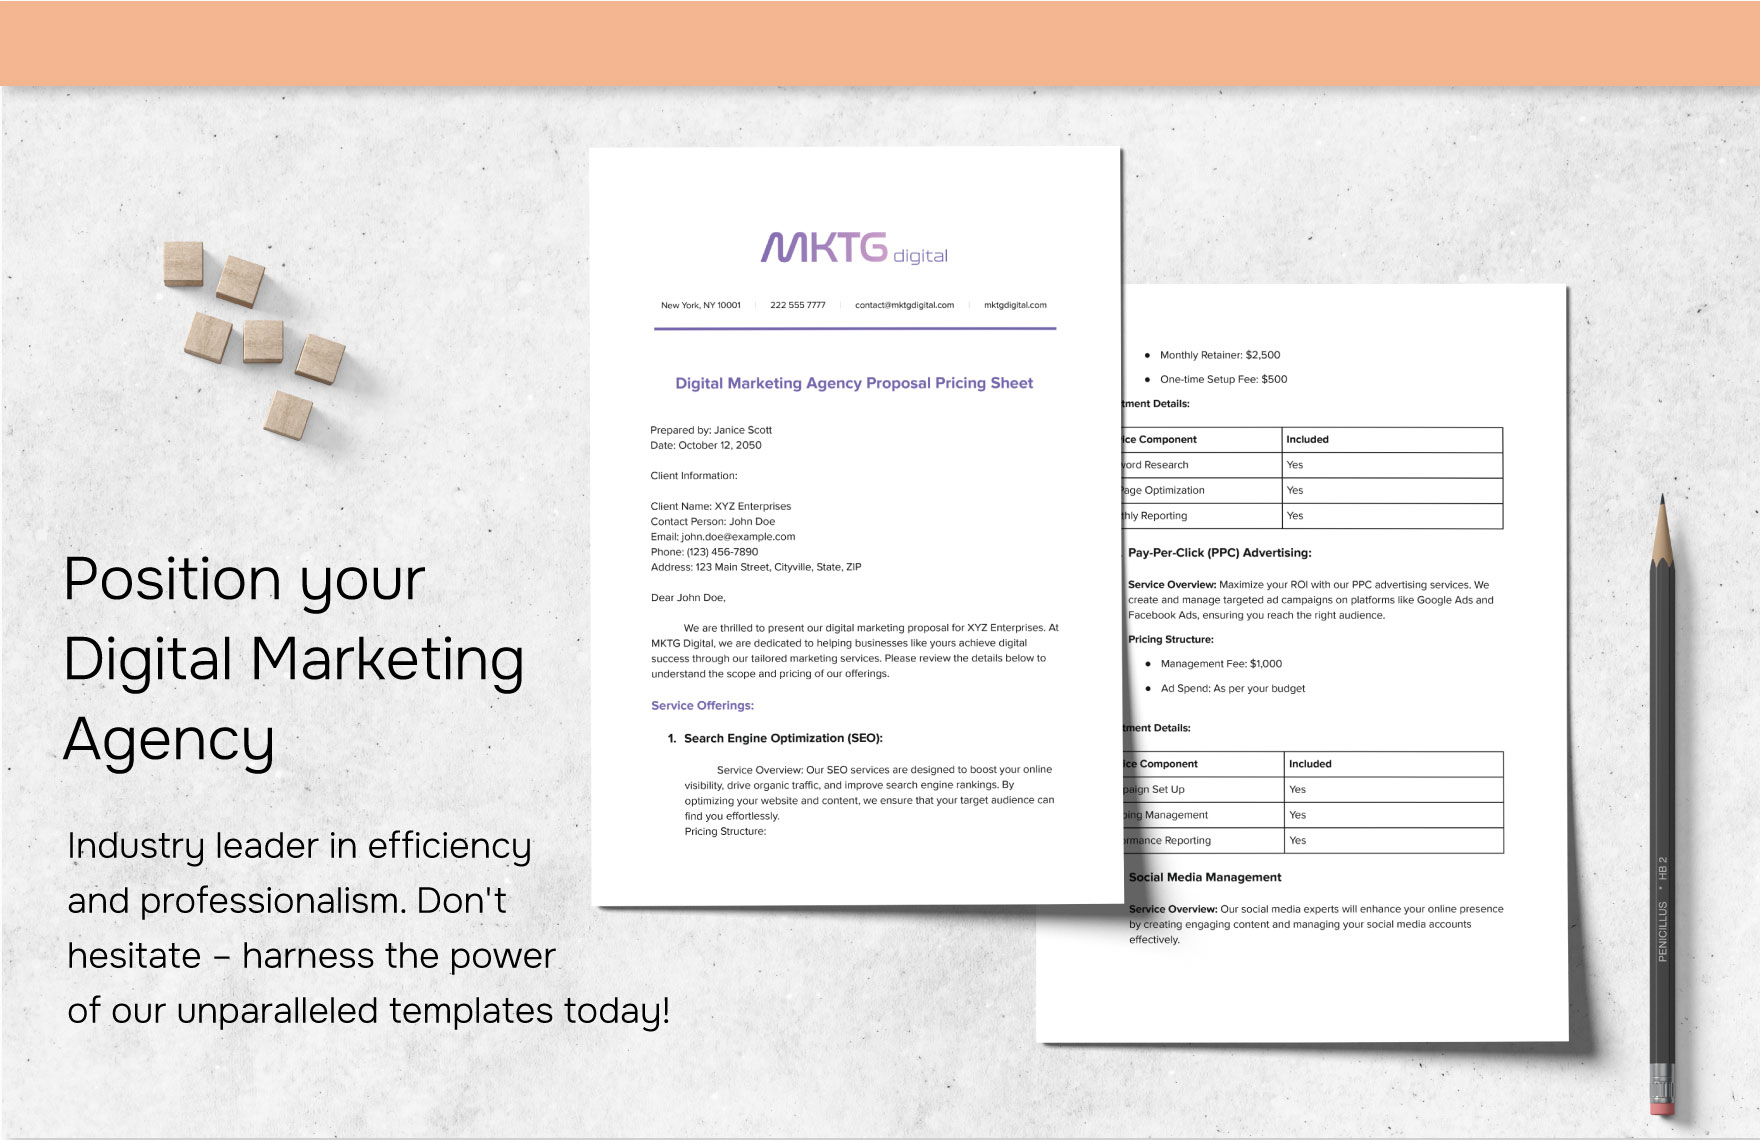 Digital Marketing Agency Proposal Pricing Sheet Template